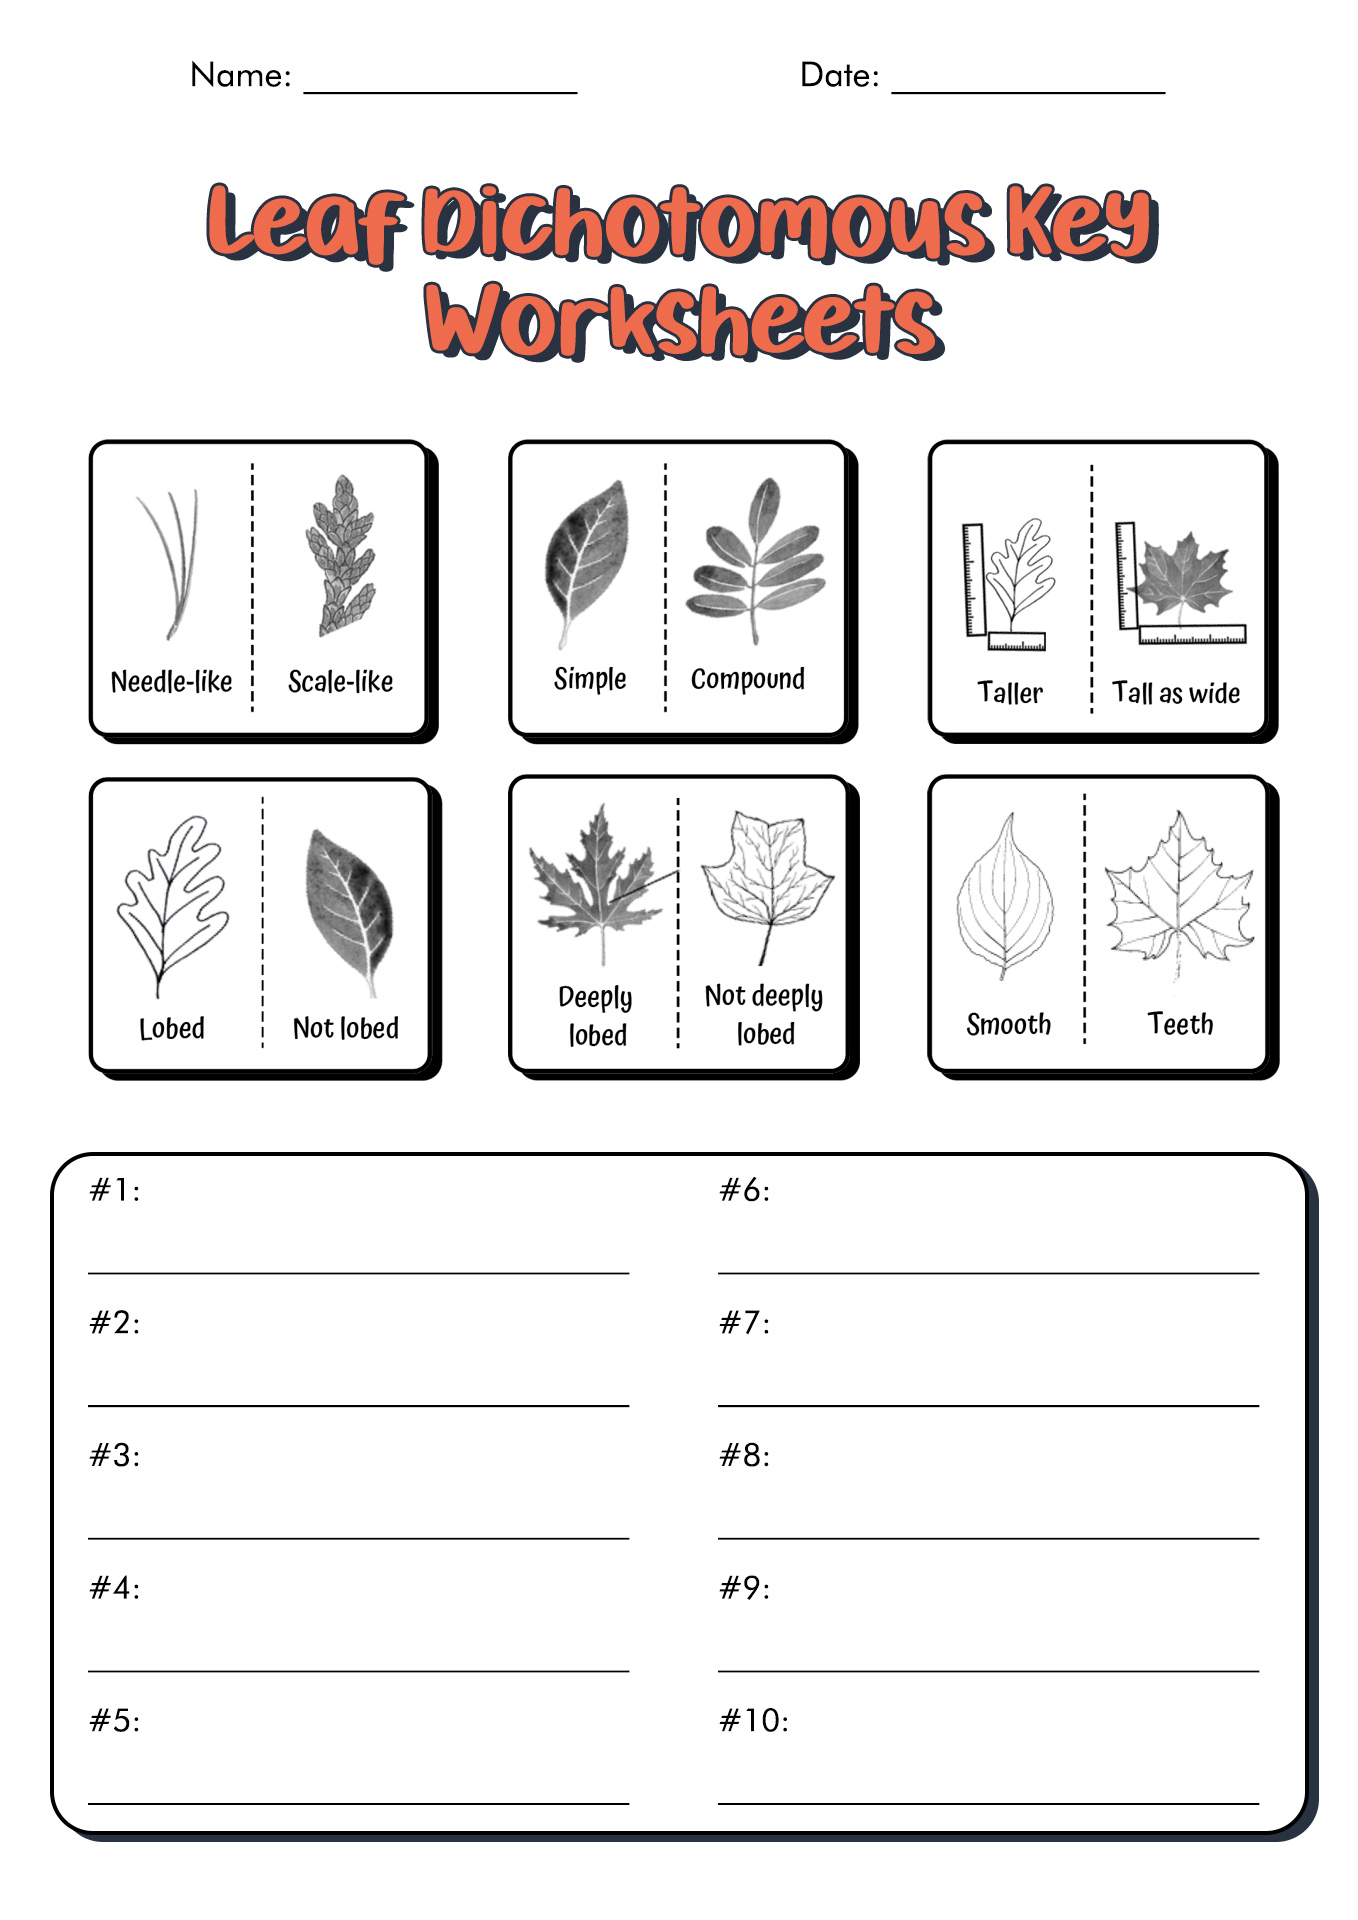 Leaf Dichotomous Key Worksheet Image